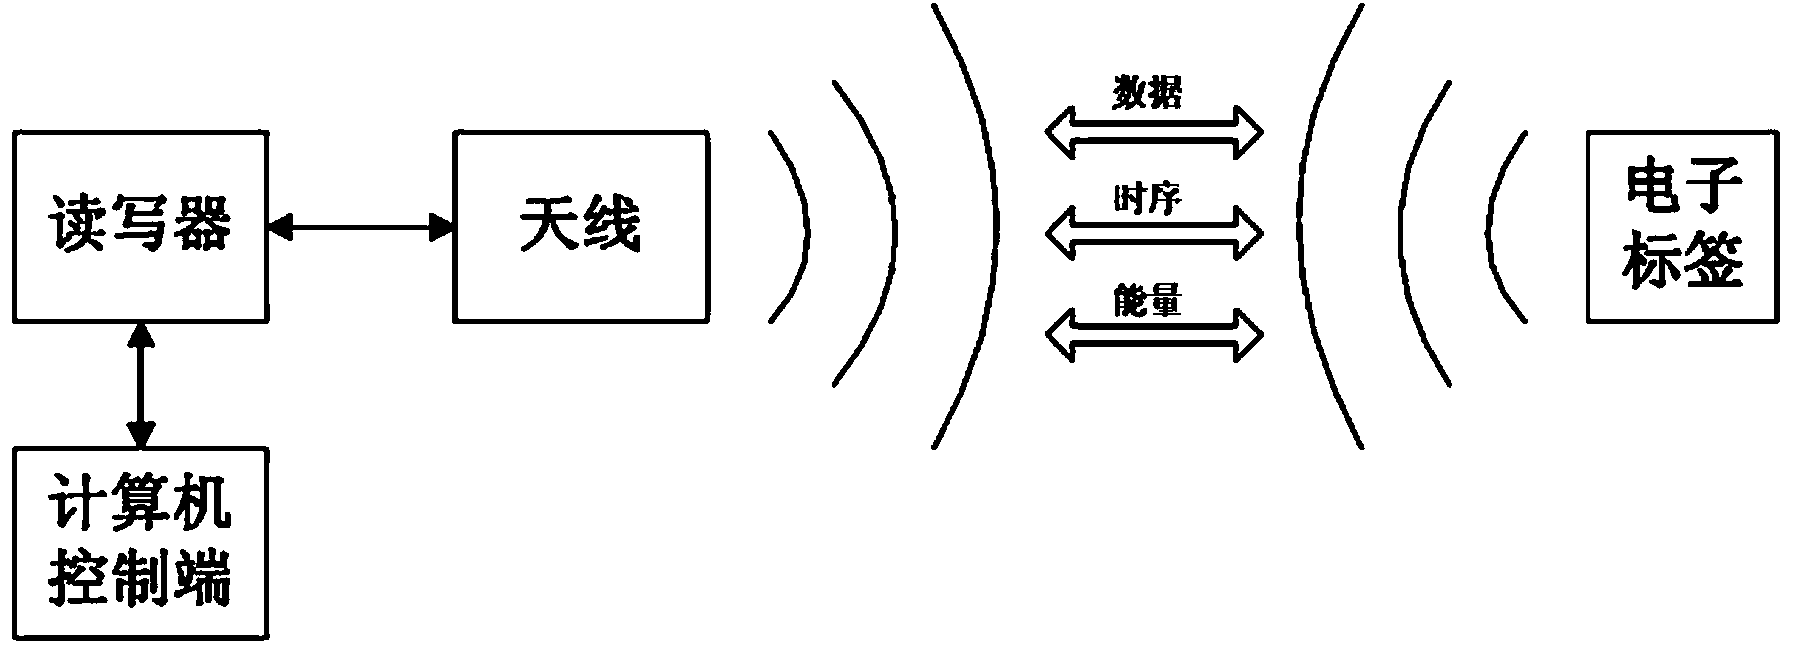 RFID antenna system